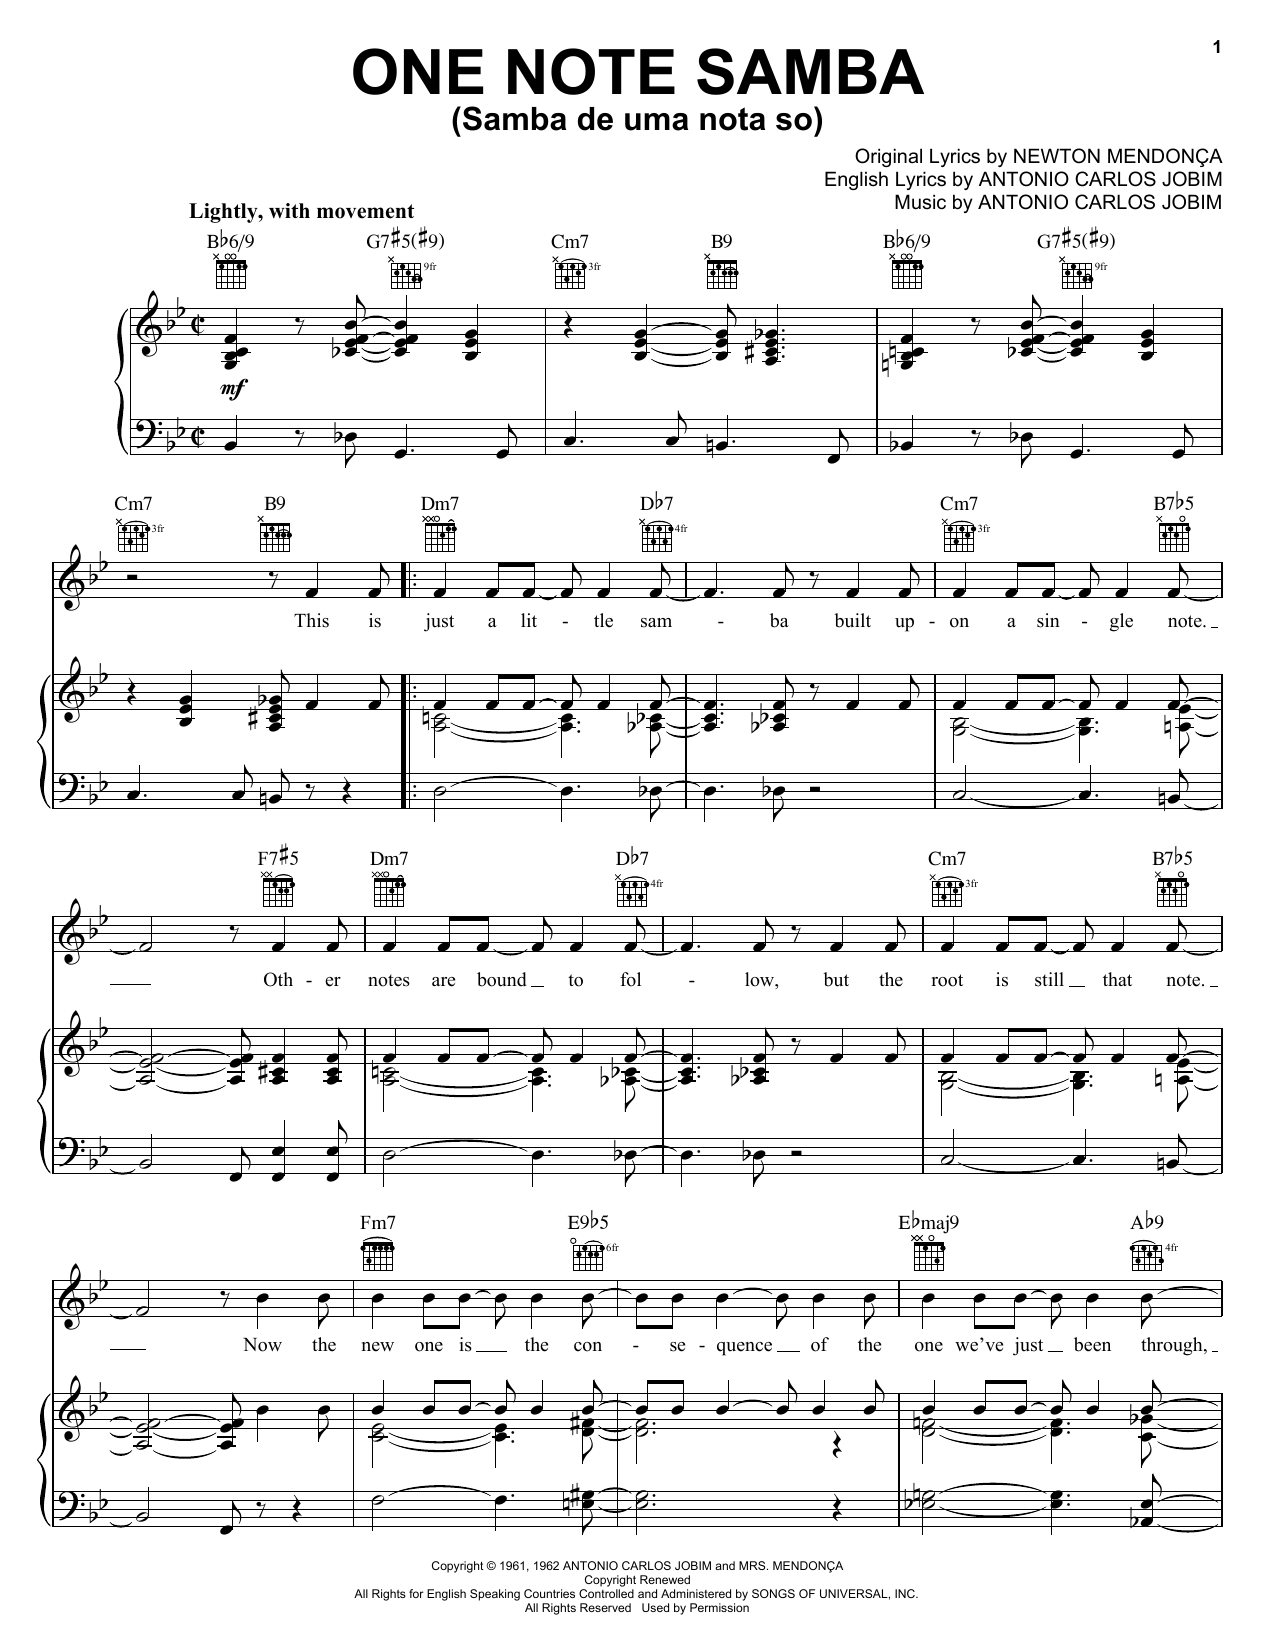 Antonio Carlos Jobim One Note Samba (Samba De Uma Nota So) Sheet Music Notes & Chords for Ukulele - Download or Print PDF